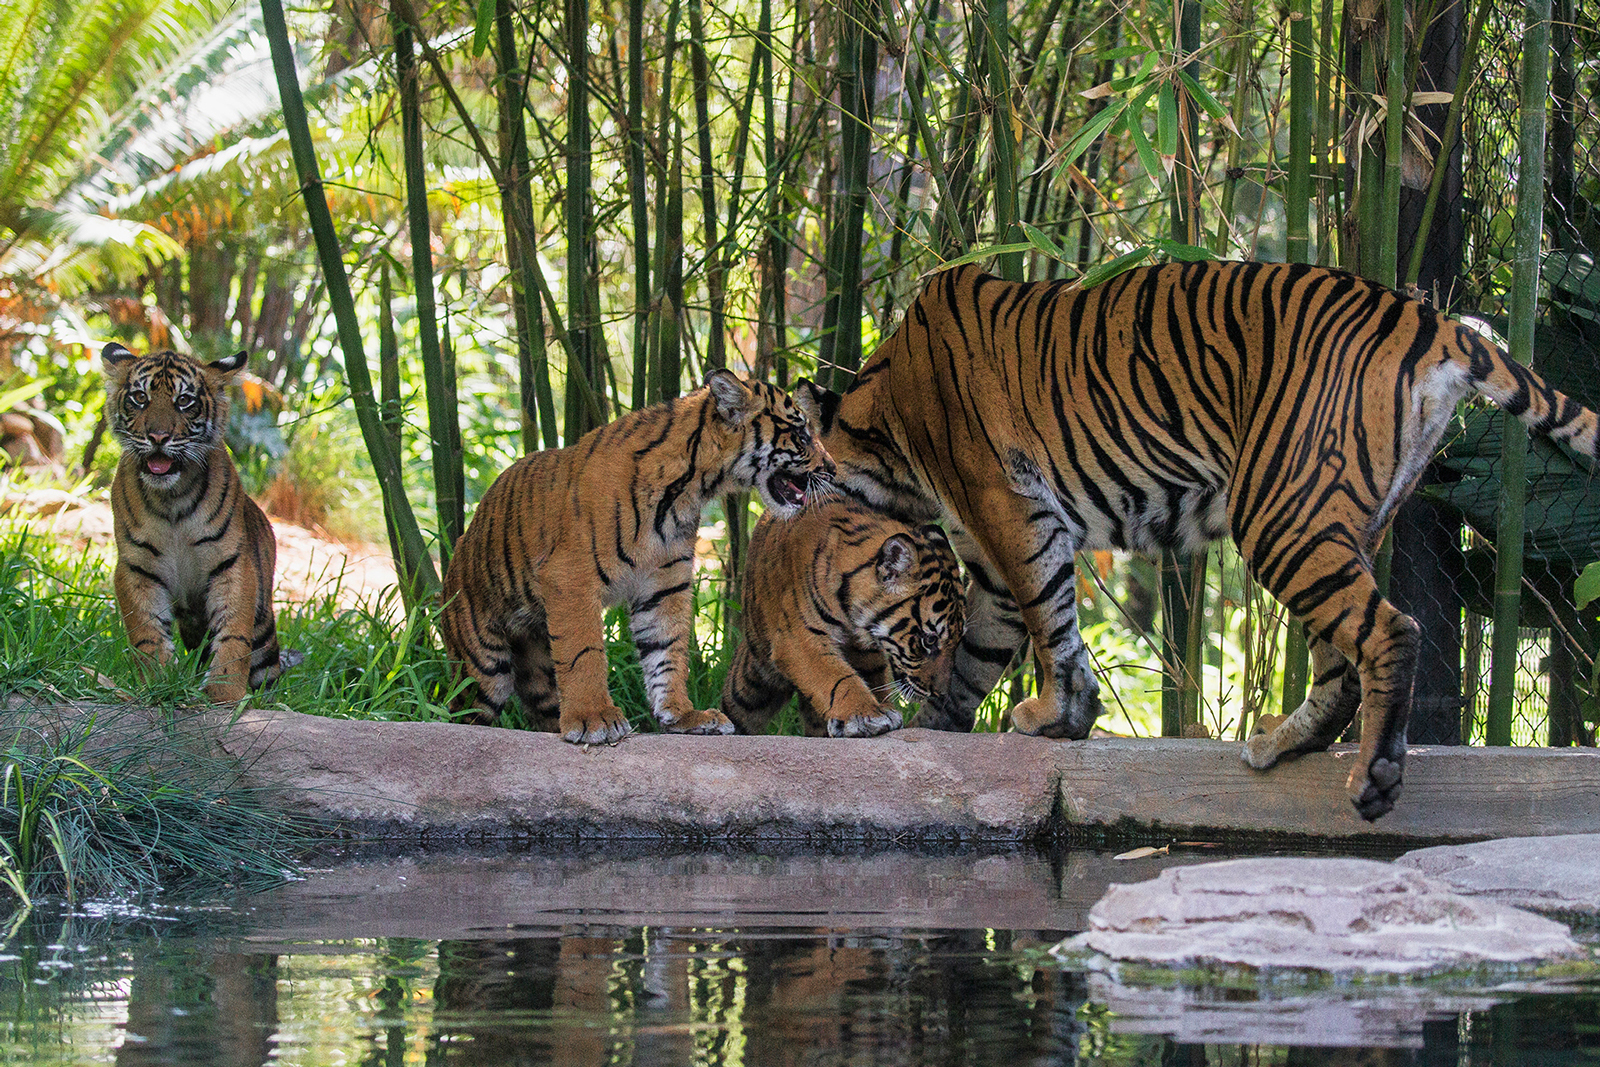 Tiger Cubs Explore New Habitat at the San Diego Zoo Safari Park